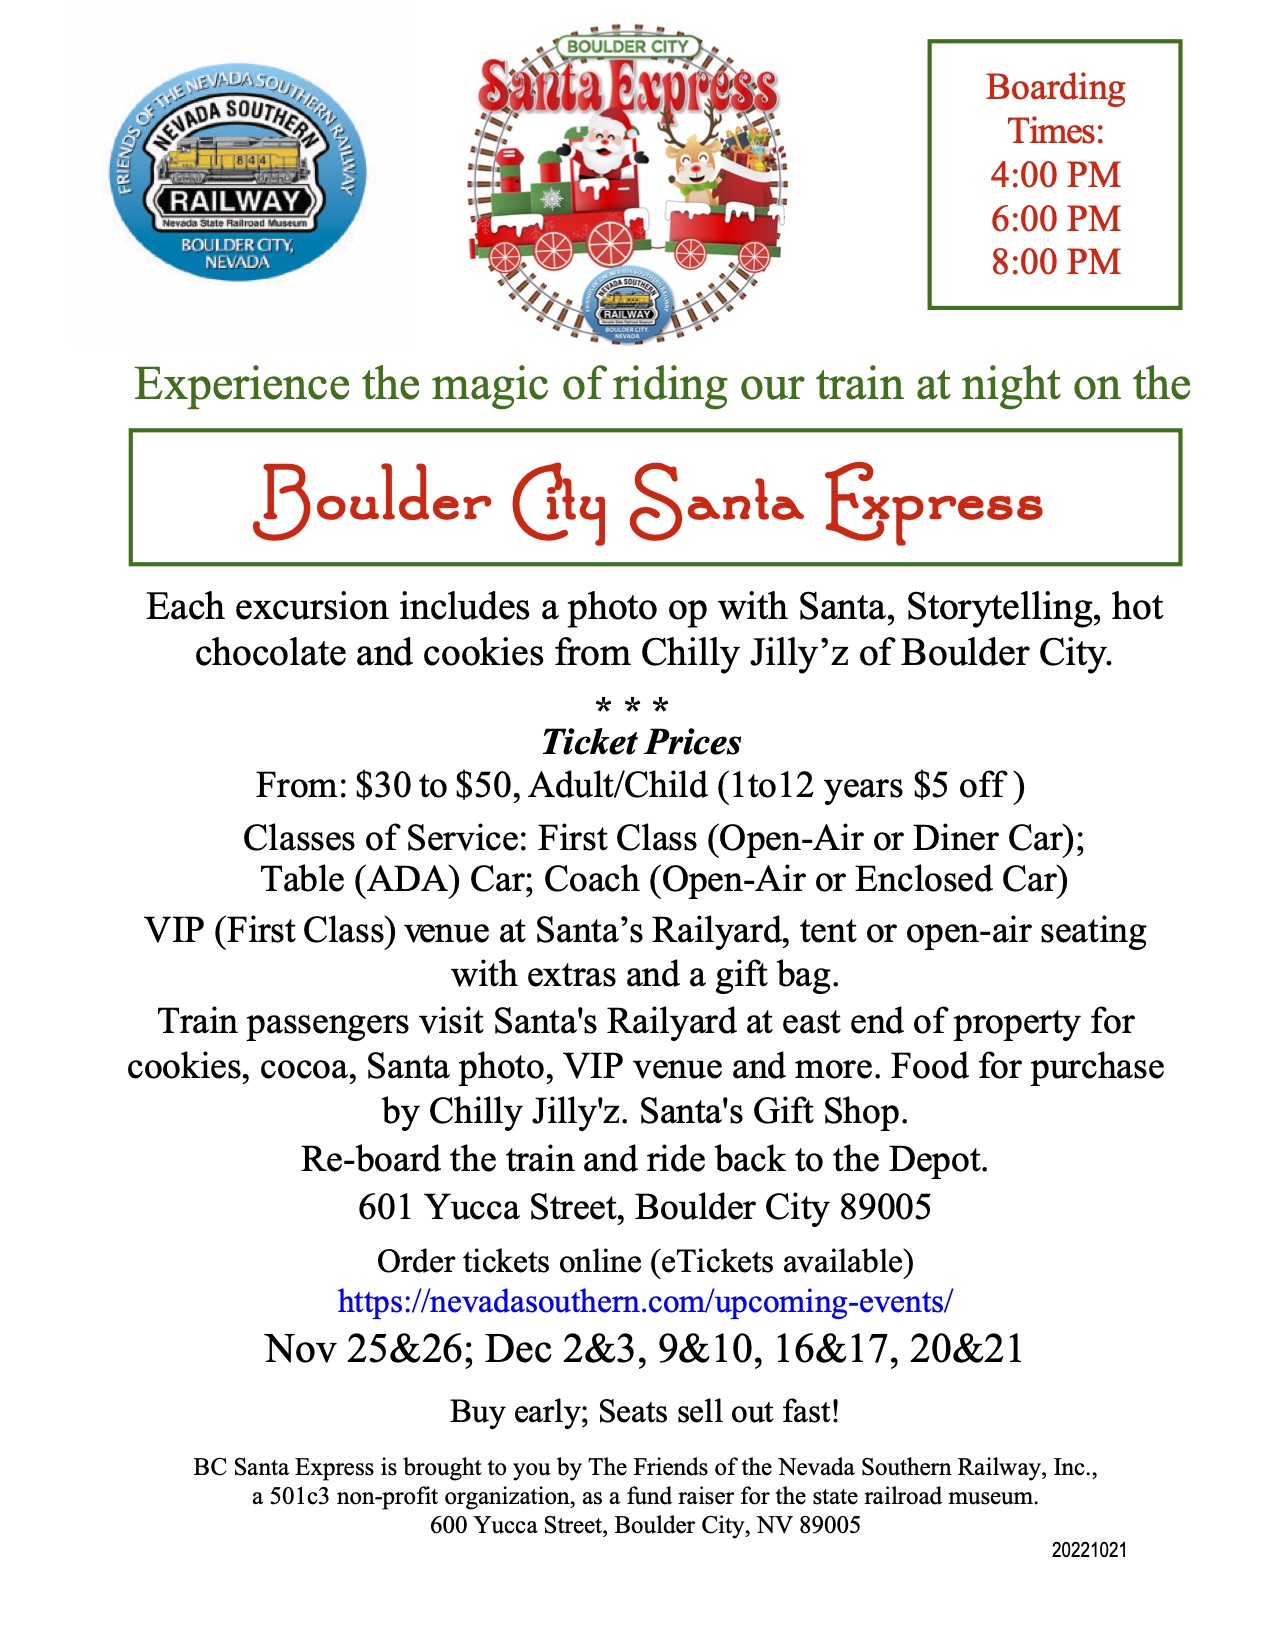 Santa express flyer 2022 Boulder City, Nevada